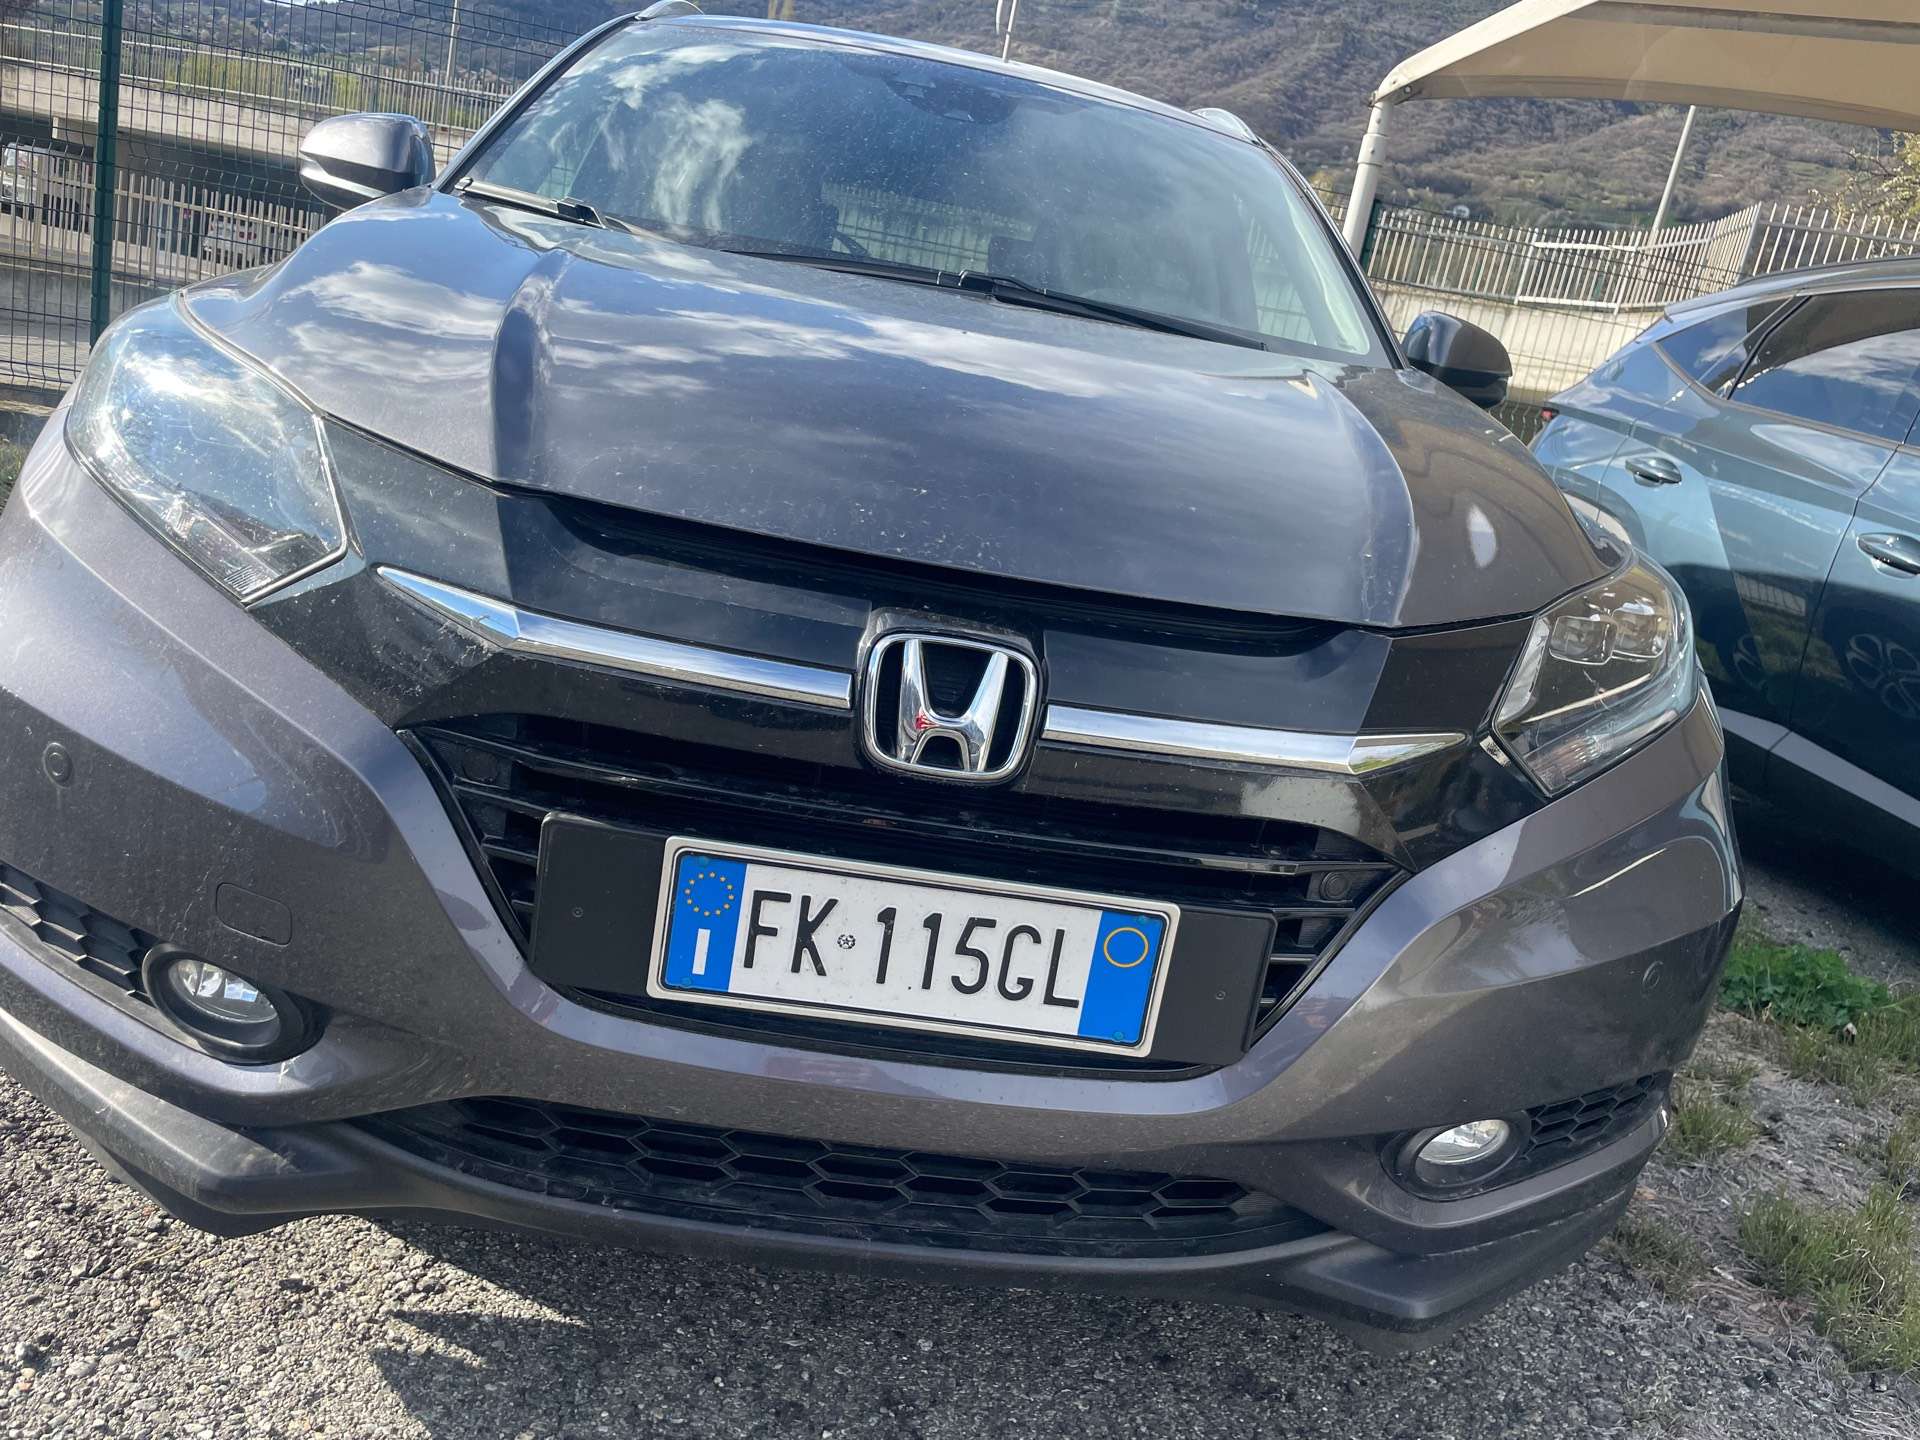 Honda HR-V Off-Road/Pick-up in Grey used in Torino TO for € 15,900.-